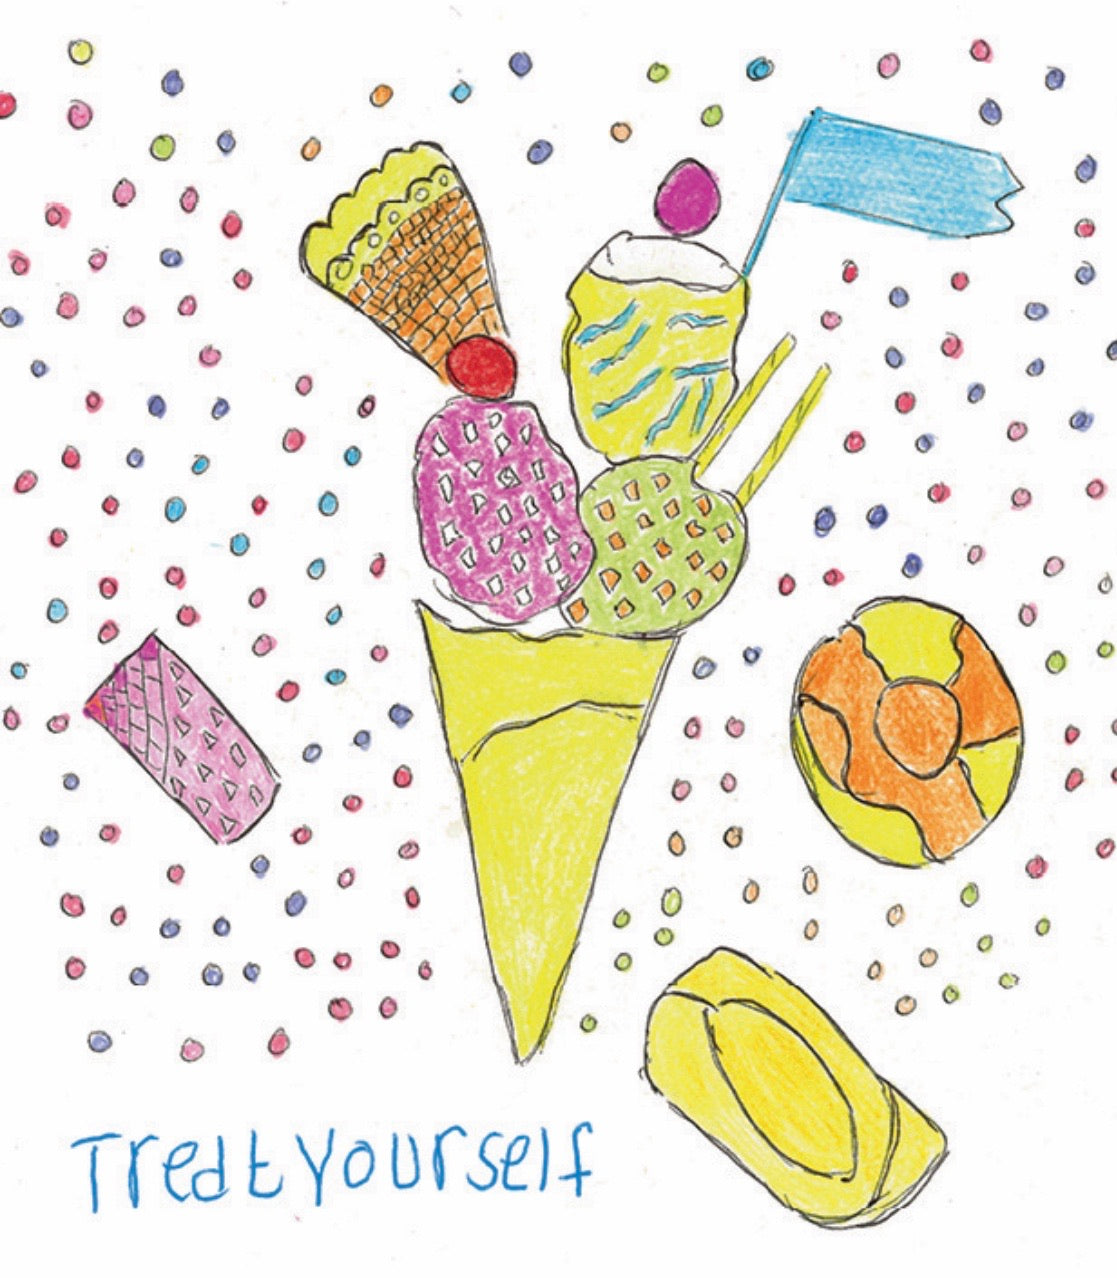 Ice-cream Greeting Card